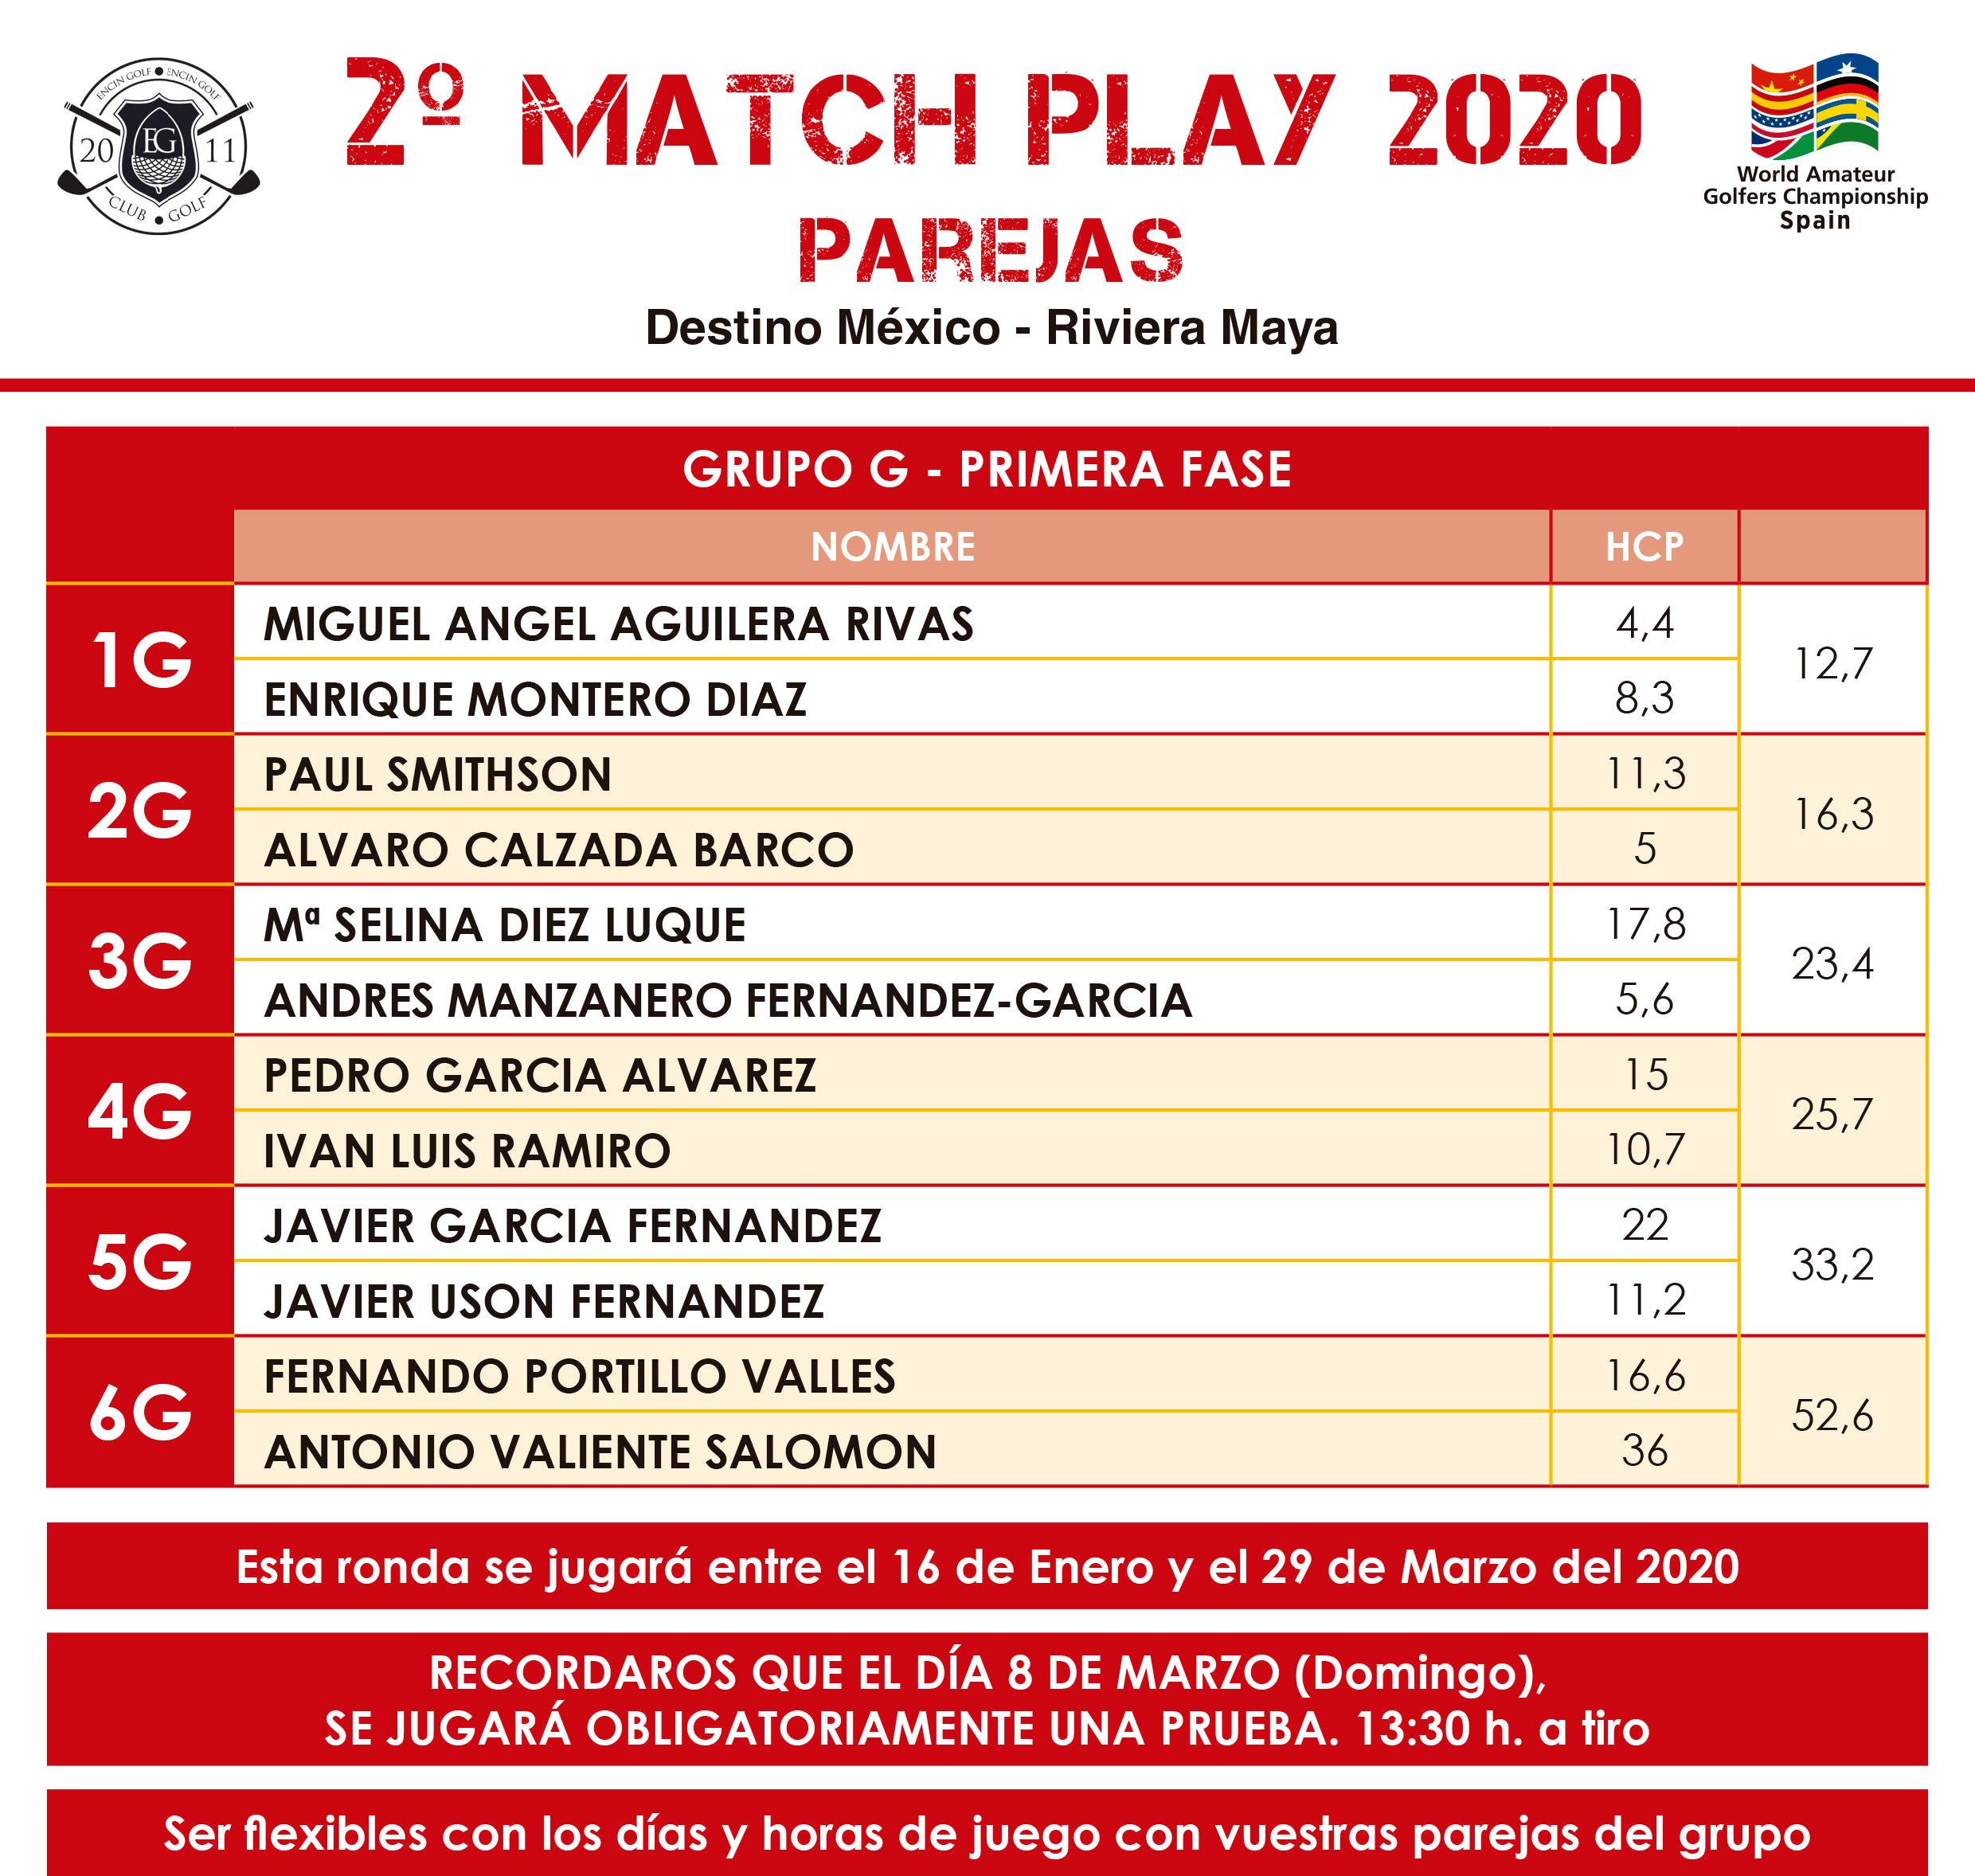 WAGC SPAIN - MATCH PLAY 2020 PAREJAS - 1ª FASE - GRUPO G